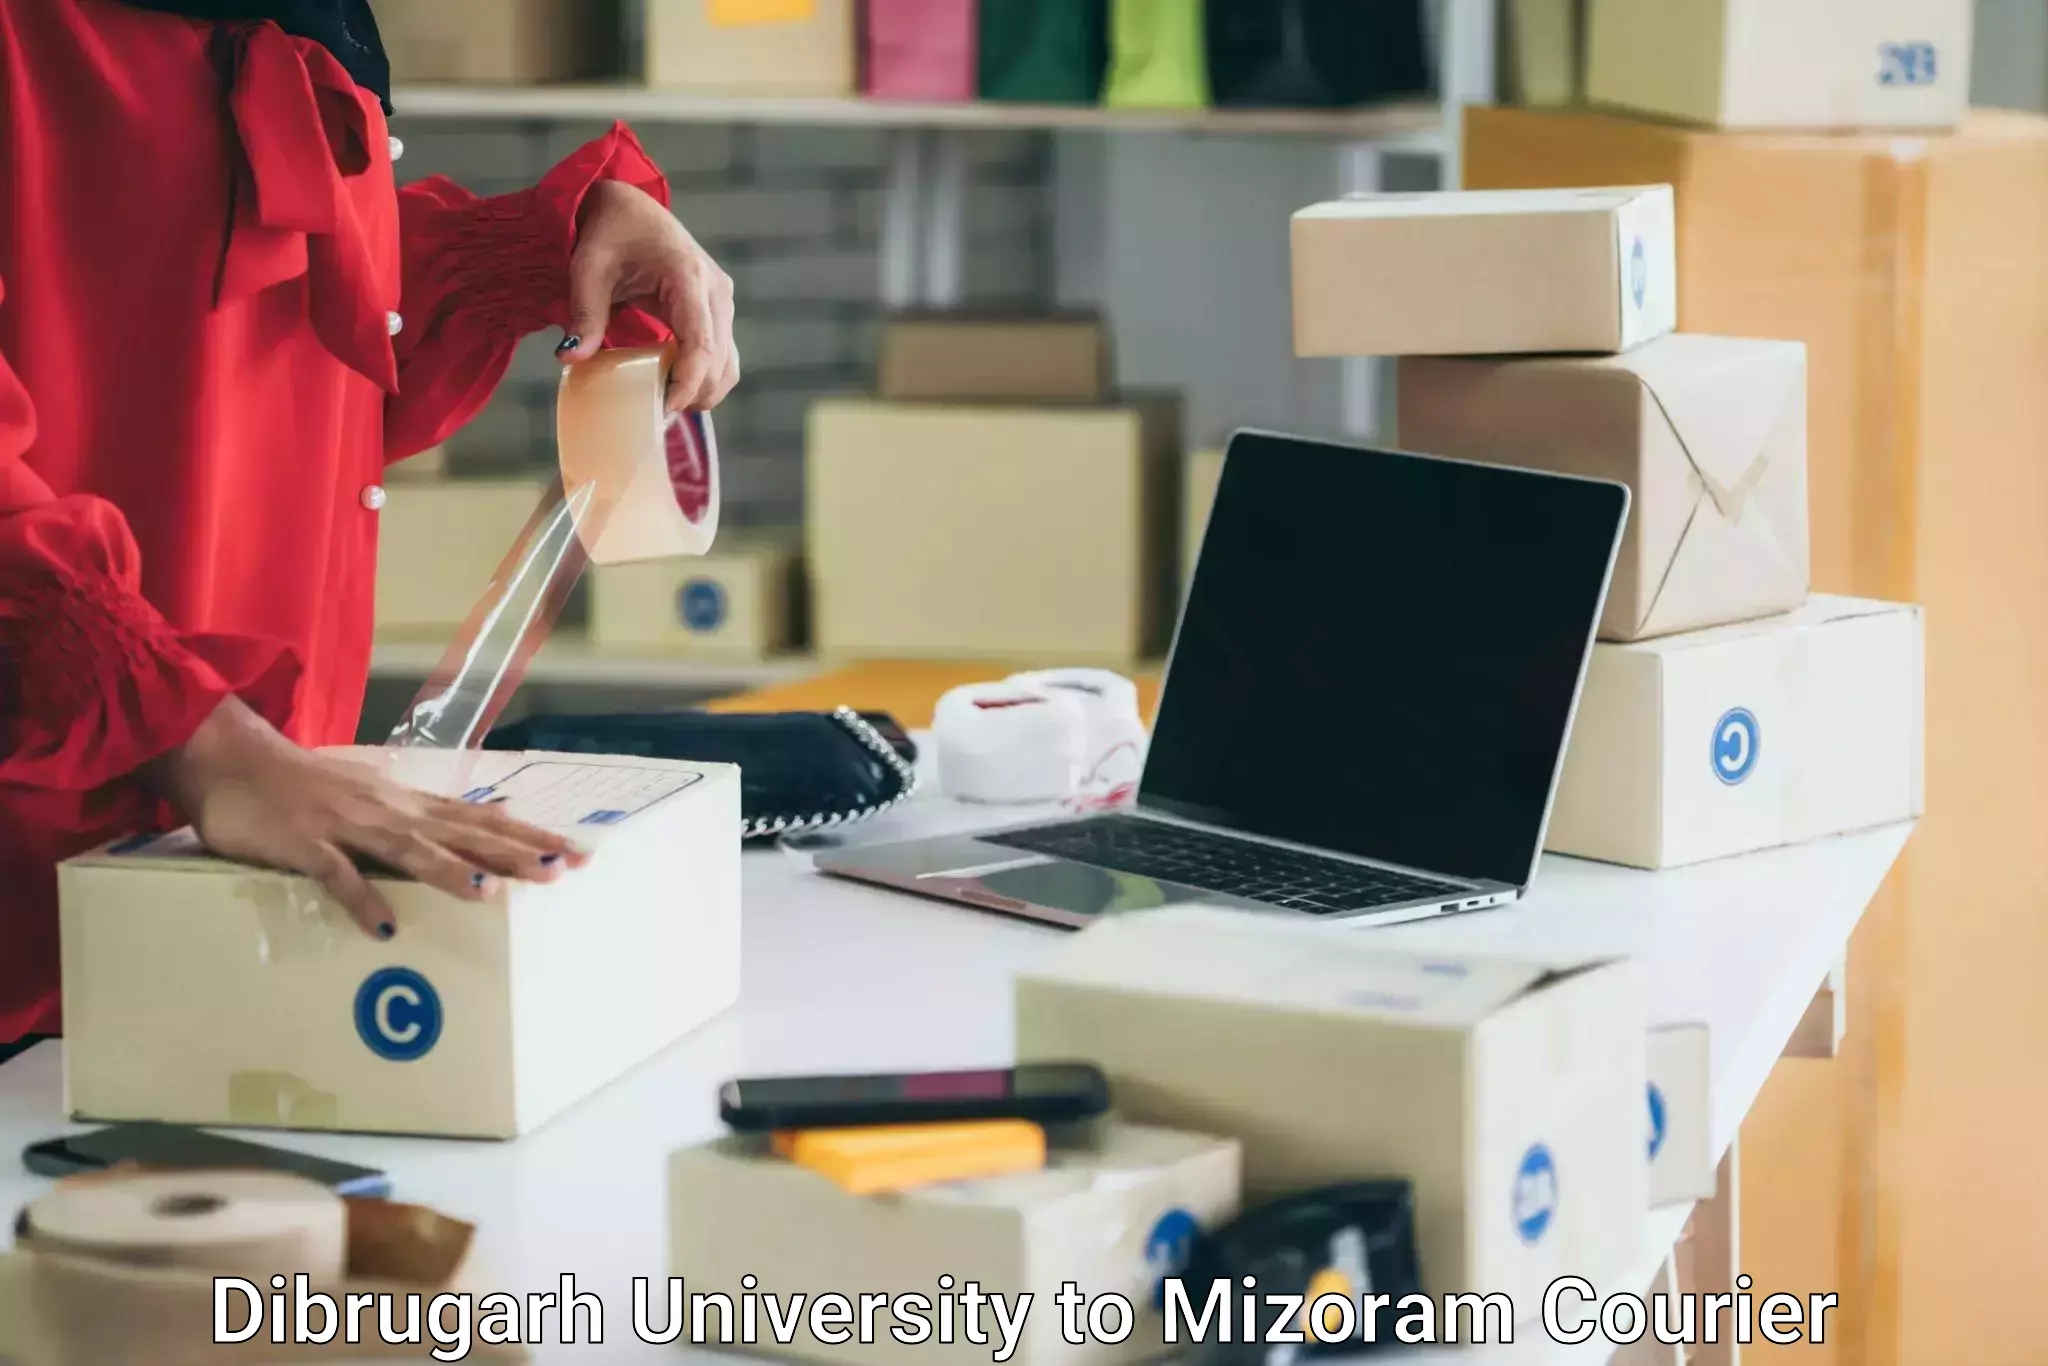 Home goods moving company Dibrugarh University to Mizoram